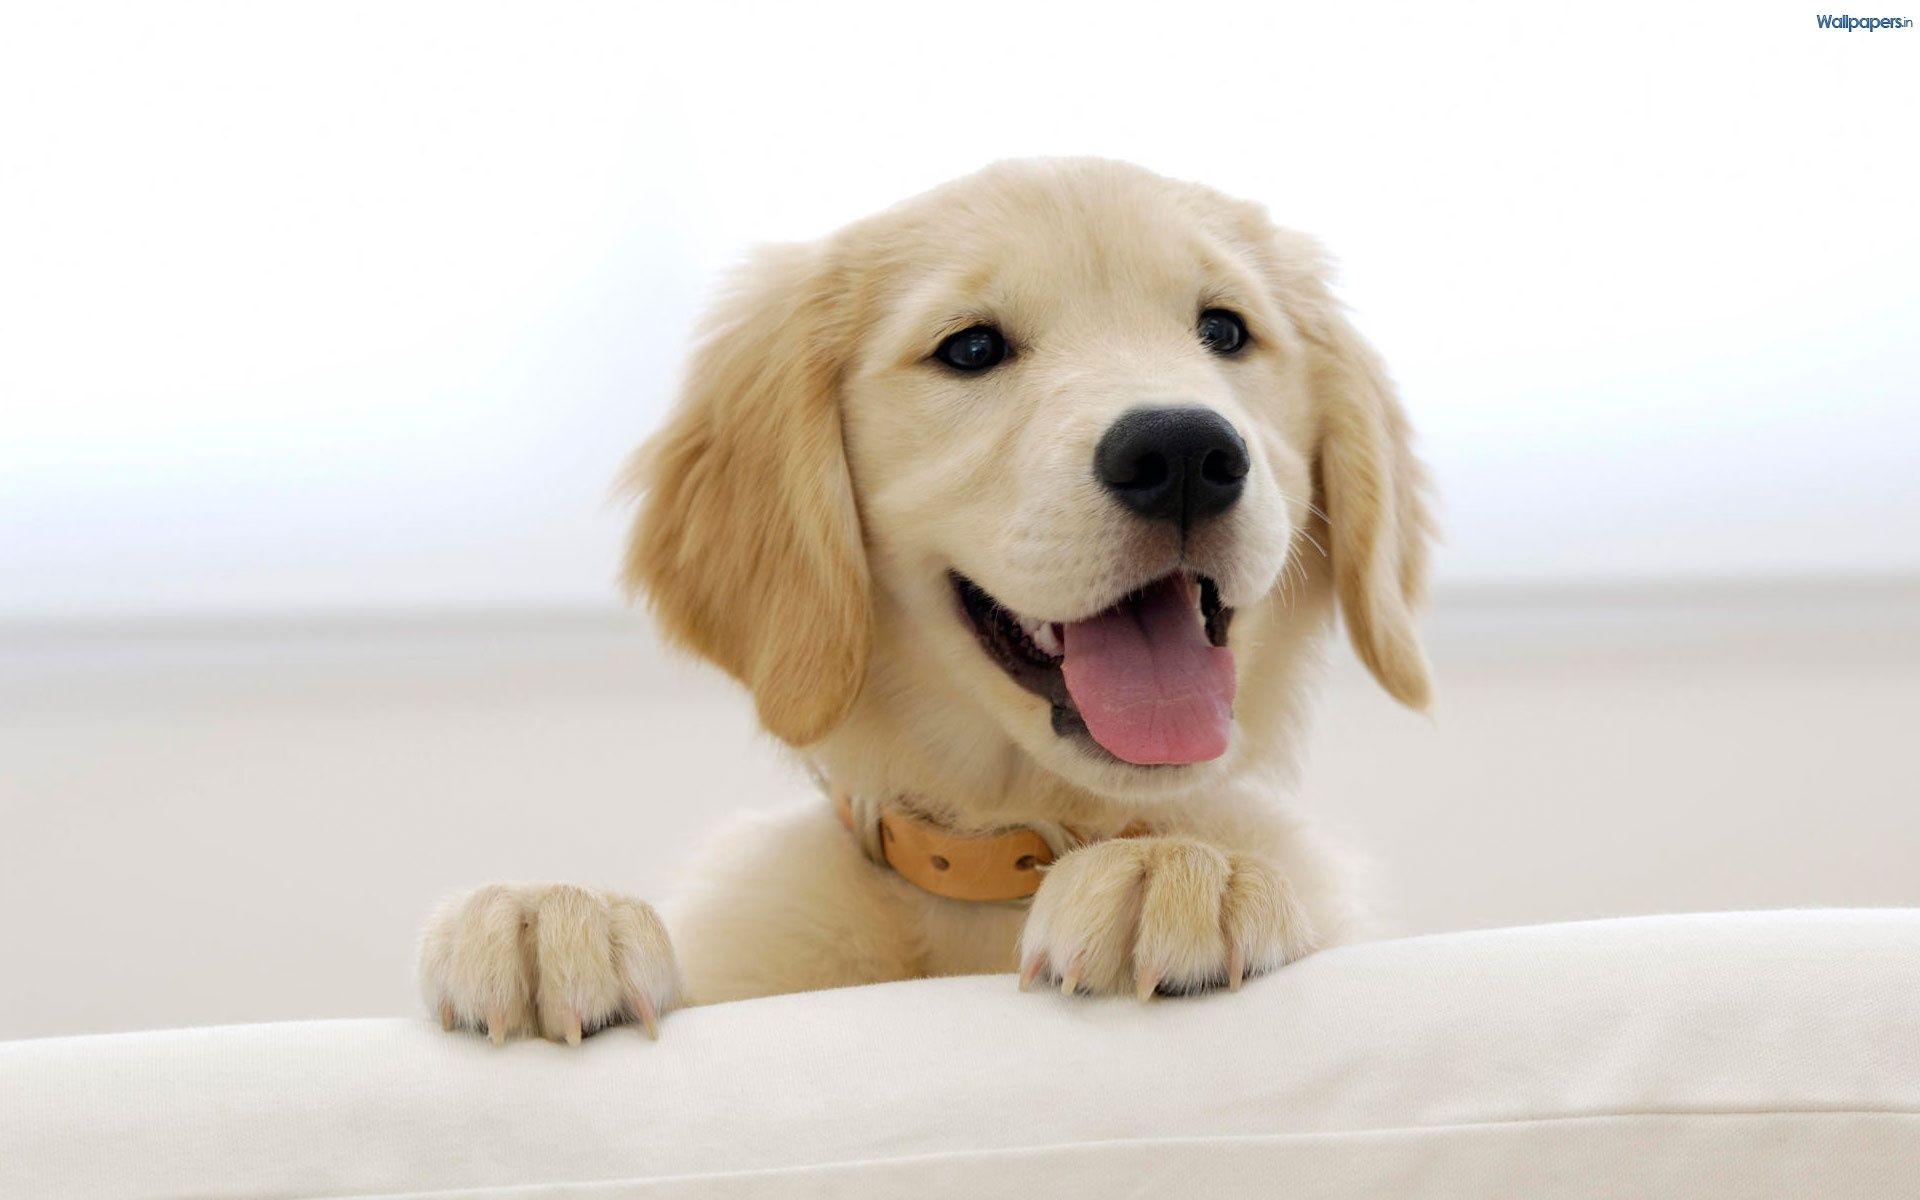 Cute Puppy Wallpaper For Desktop Image & Picture